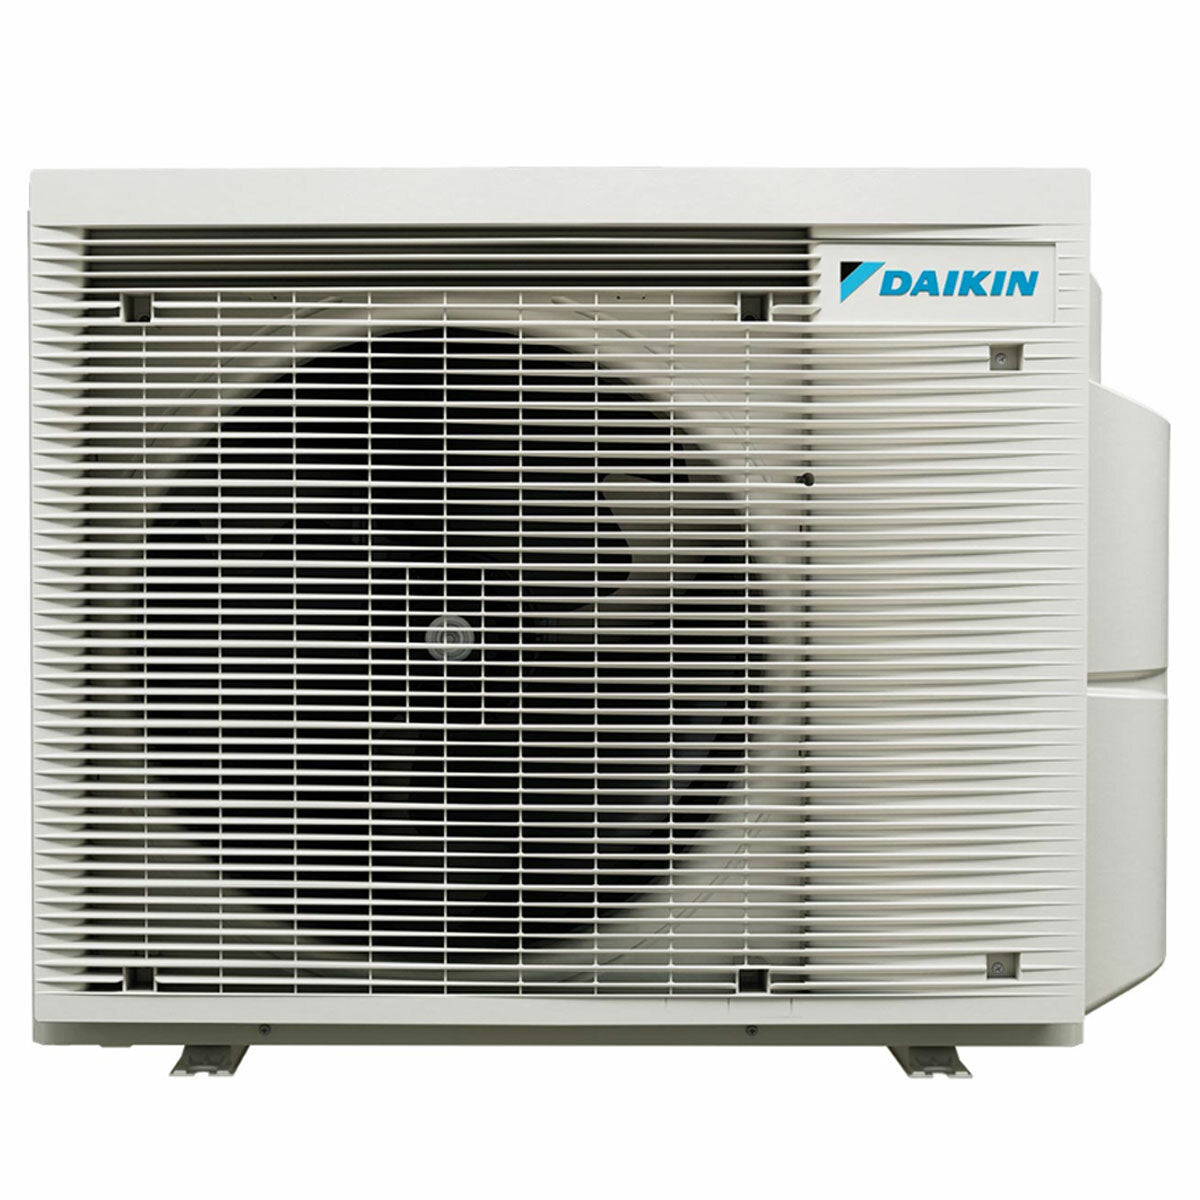 Daikin Mini Sky FDXM-F9 ducted air conditioner trial split 9000+12000+18000 BTU inverter A++ external 6.8 kW